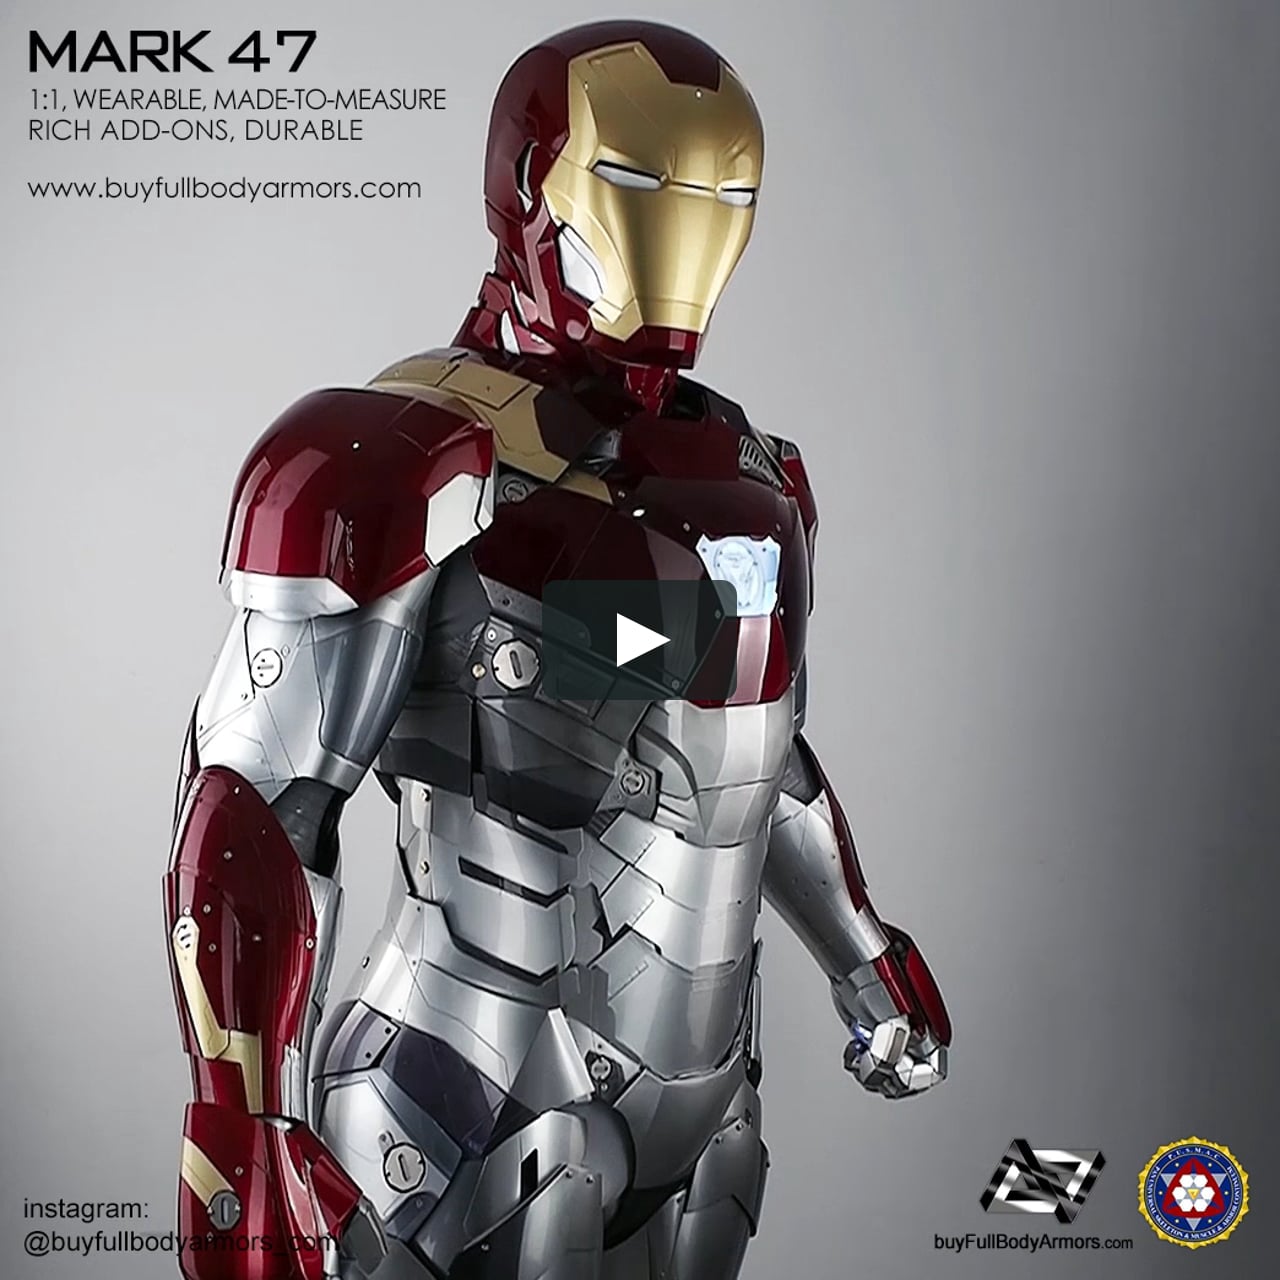 Wearable Iron Man Mark 47 Costume Full Body Demonstration On Vimeo